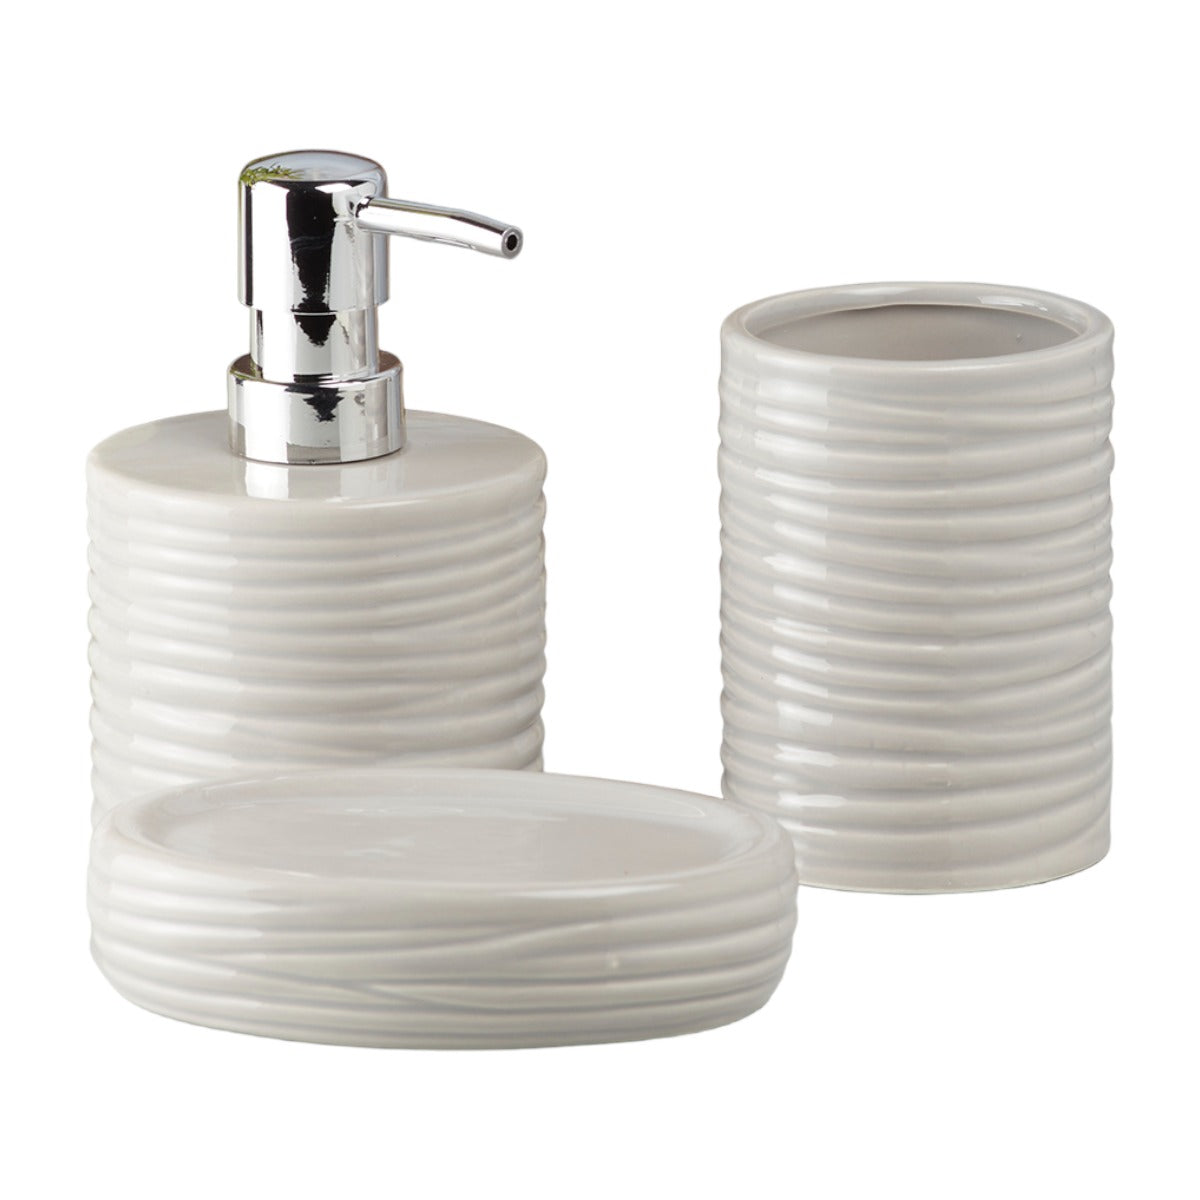 Ceramic Bathroom Accessories Set of 3 Bath Set with Soap Dispenser (10198)